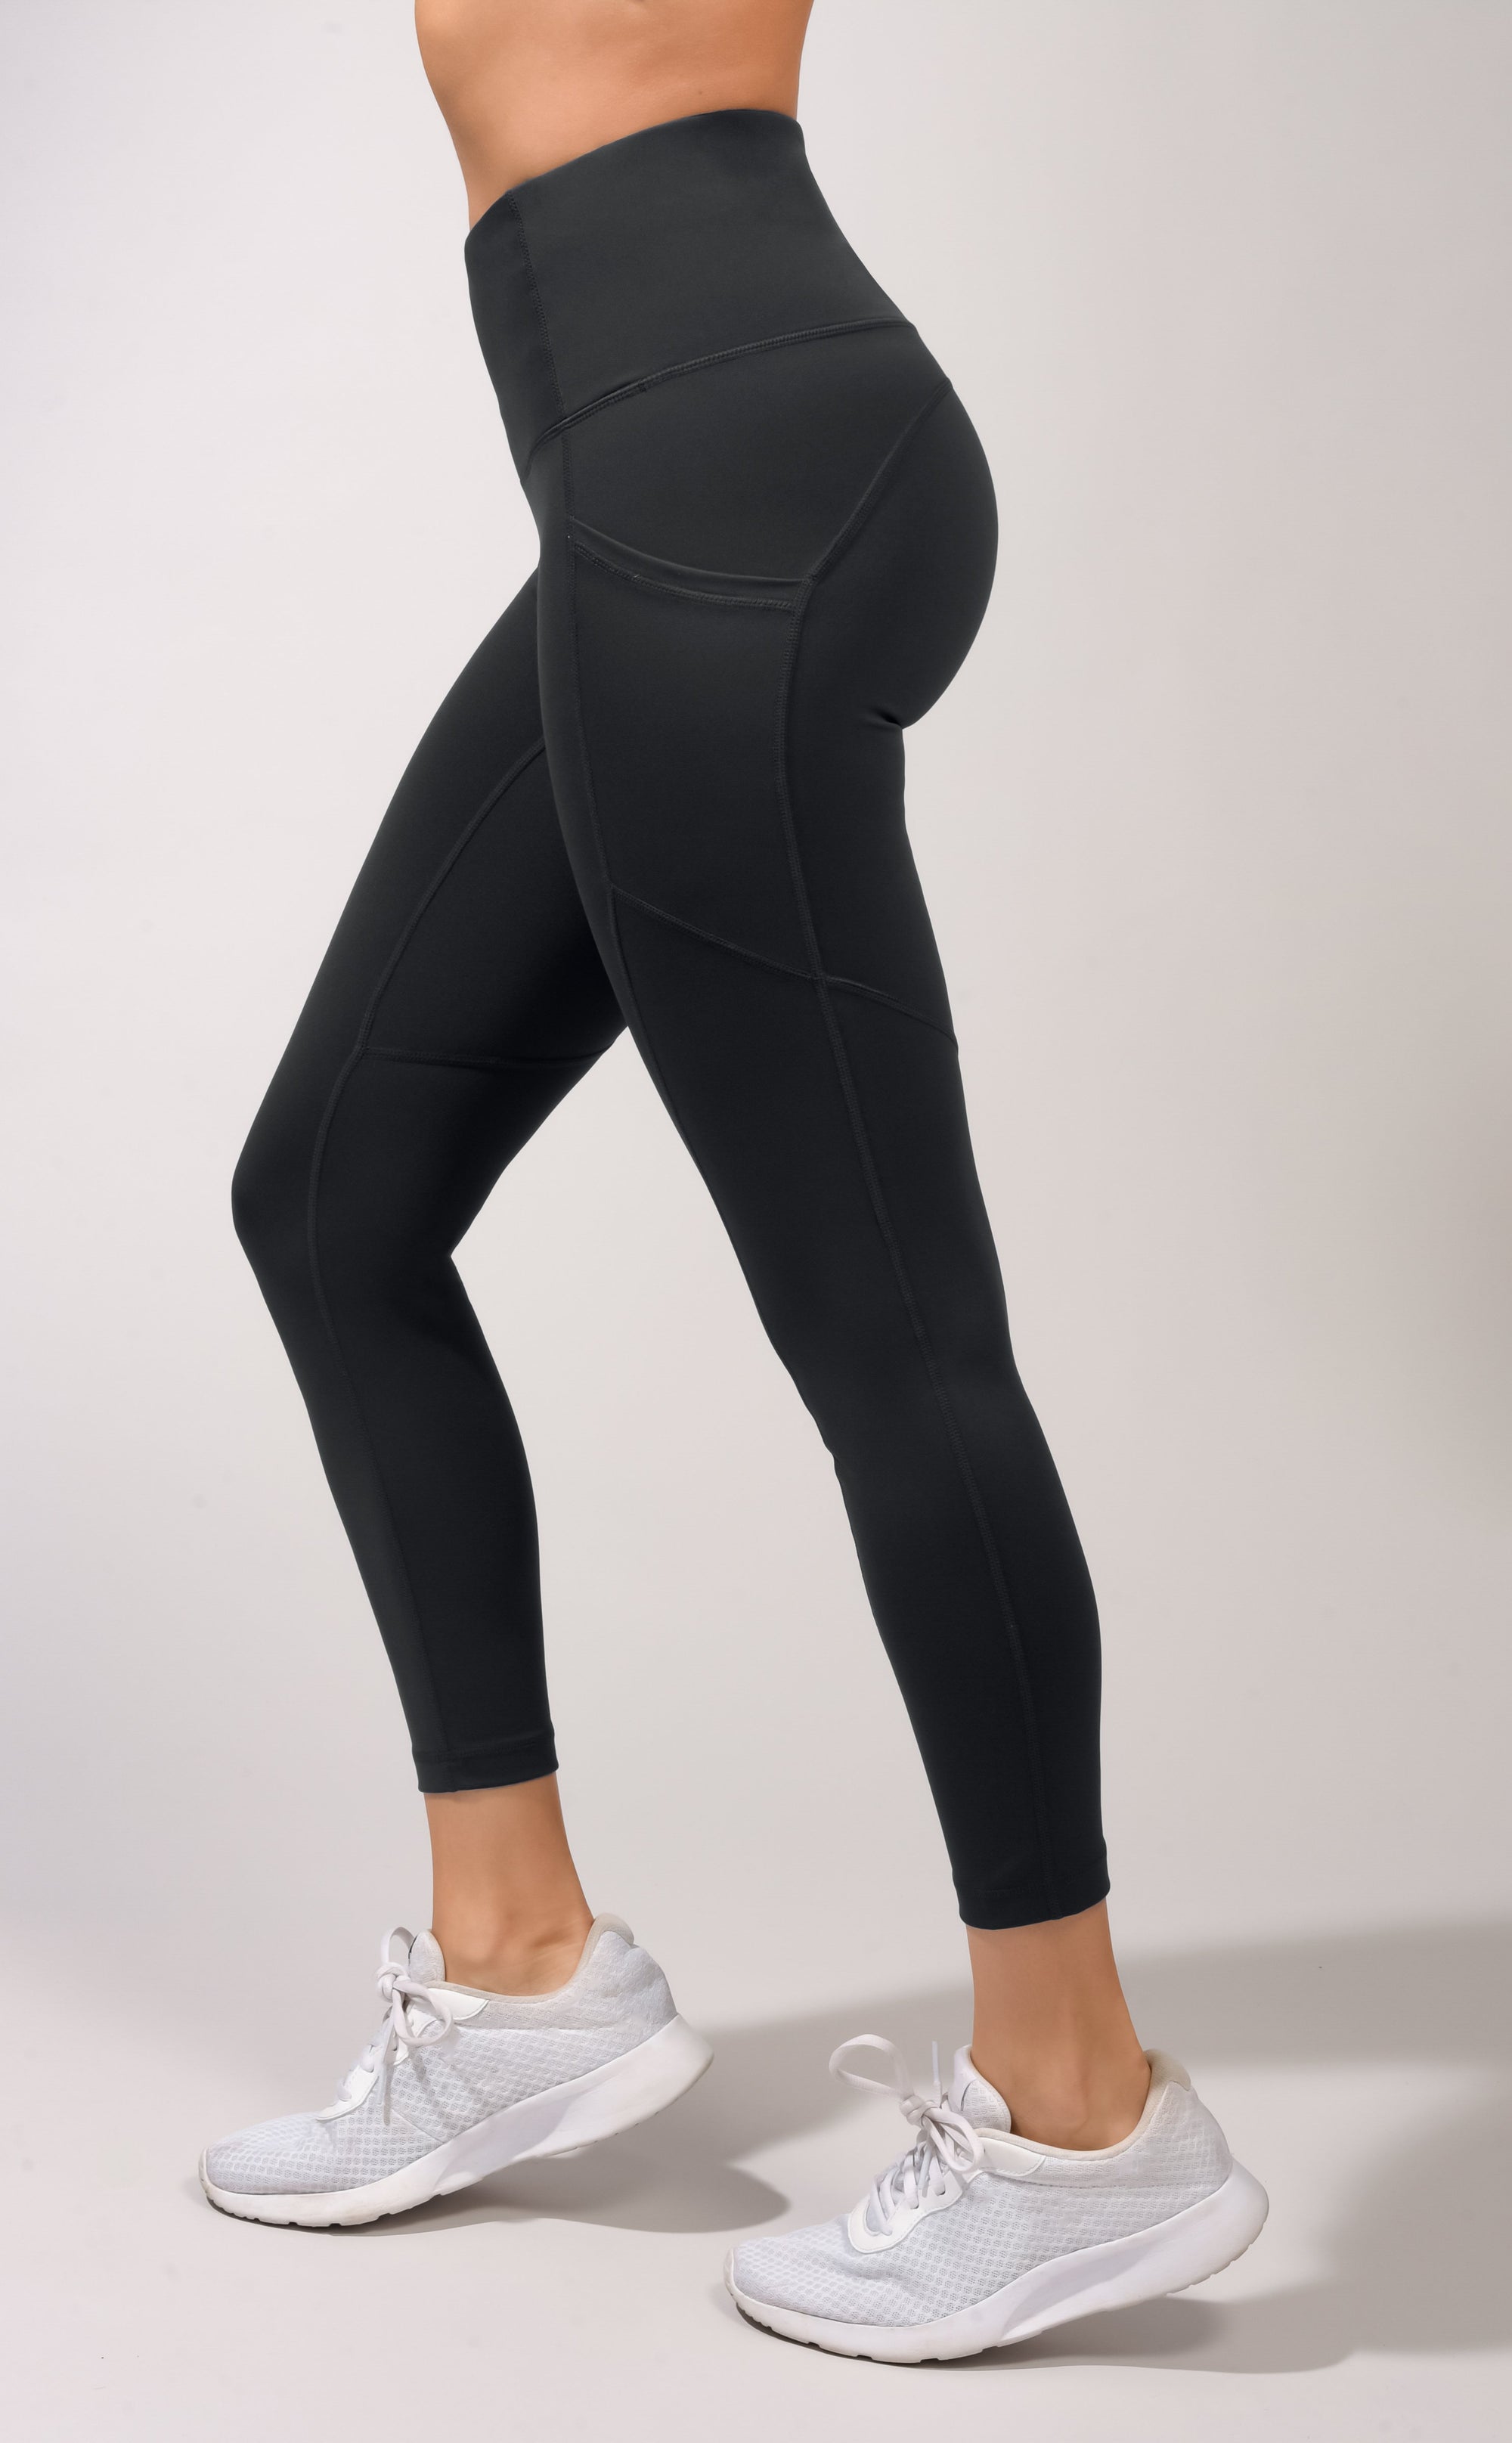 Yogalicious - Women's Lux High Waist 7/8 Ankle Legging - Black - Medium :  Target